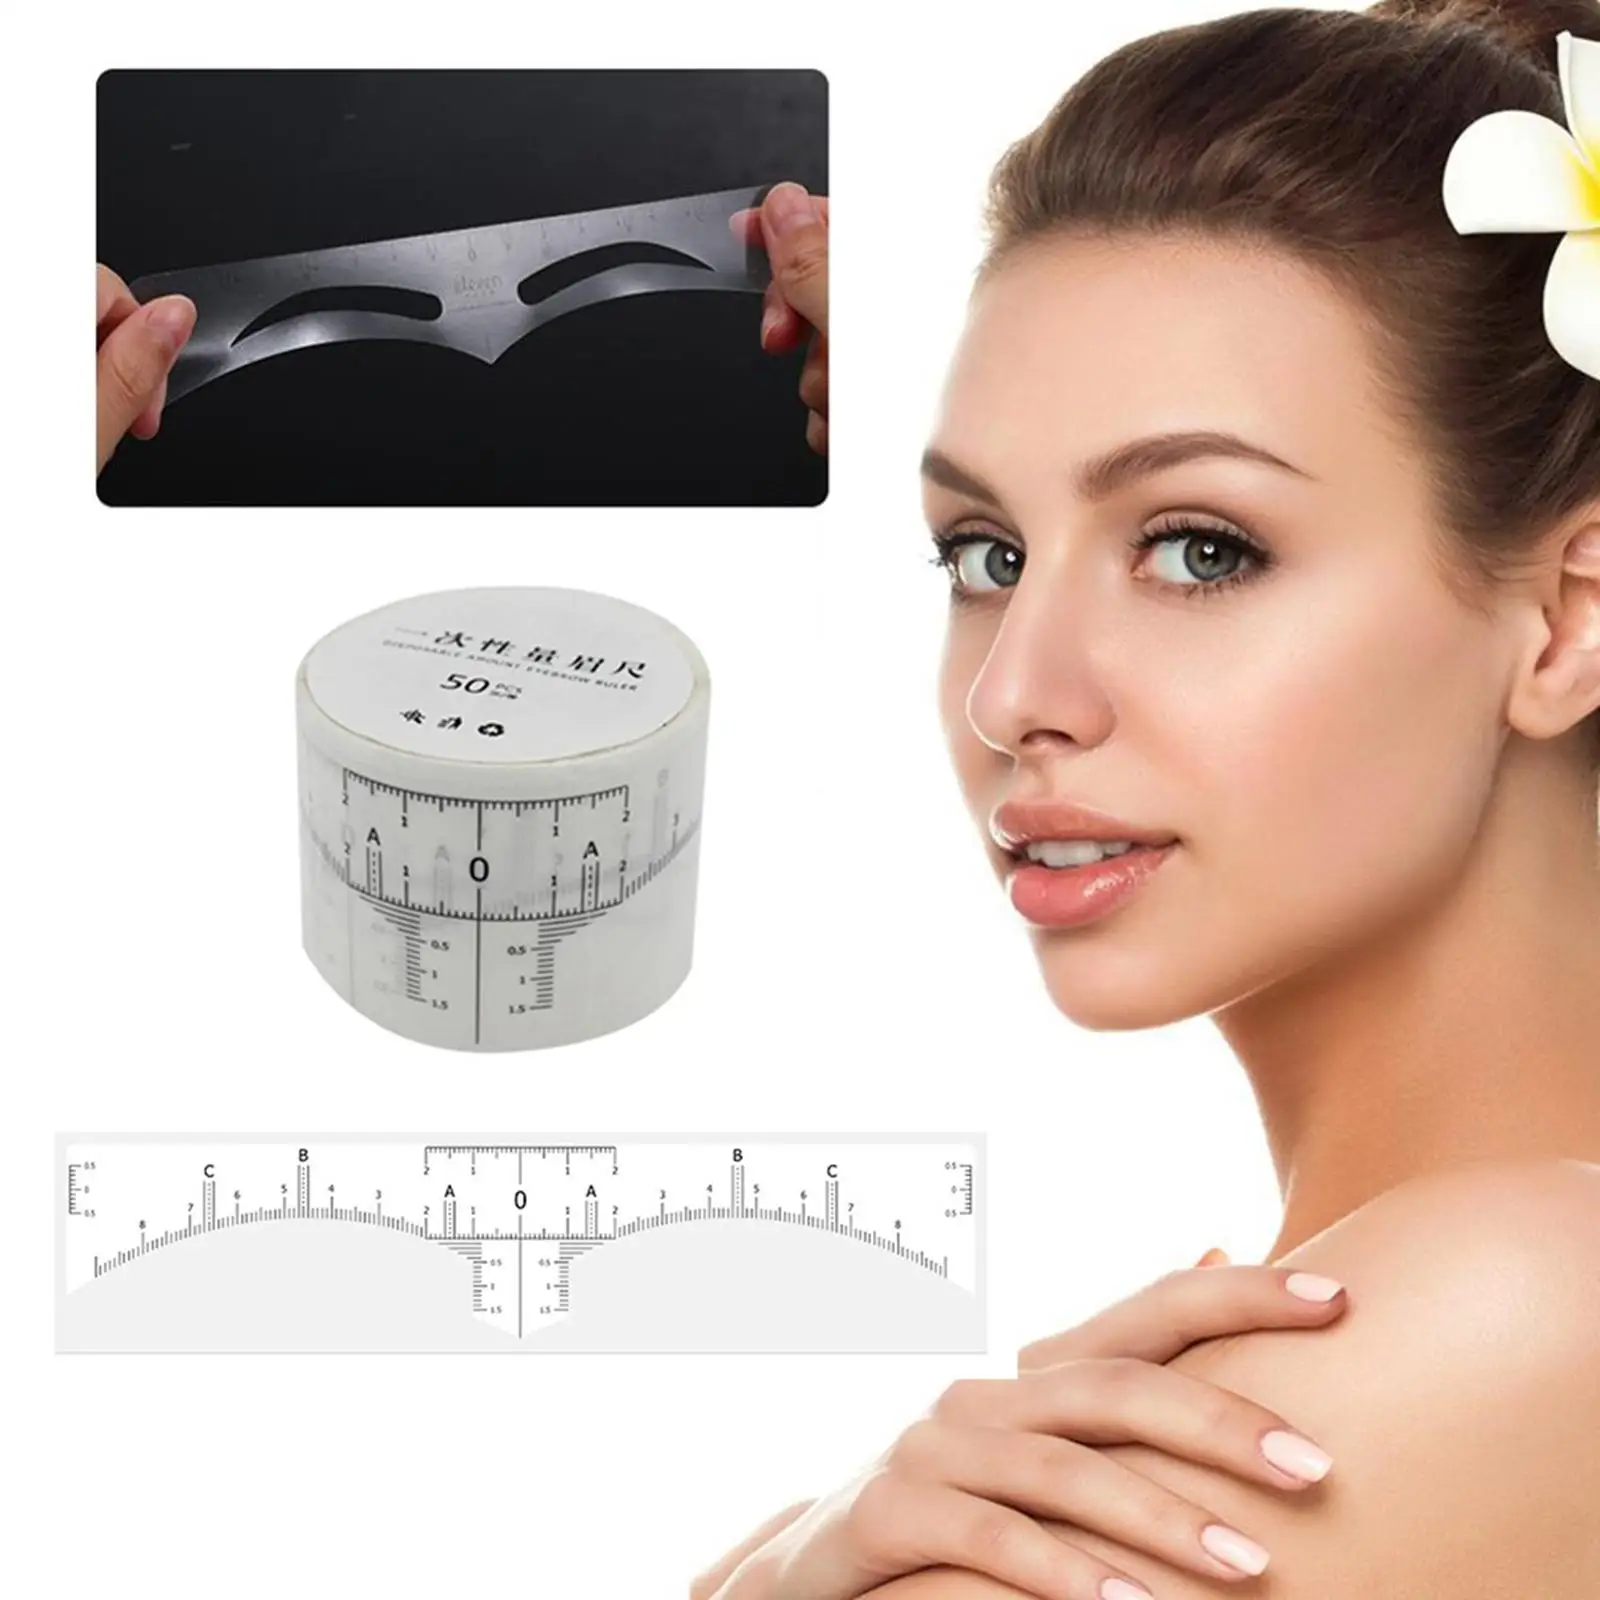 50Pcs/Roll Disposable Eyebrow Ruler Sticker Adhesive Makeup Tool Symmetrical Plastic Template Eyebrow Shaper for Beginners Women